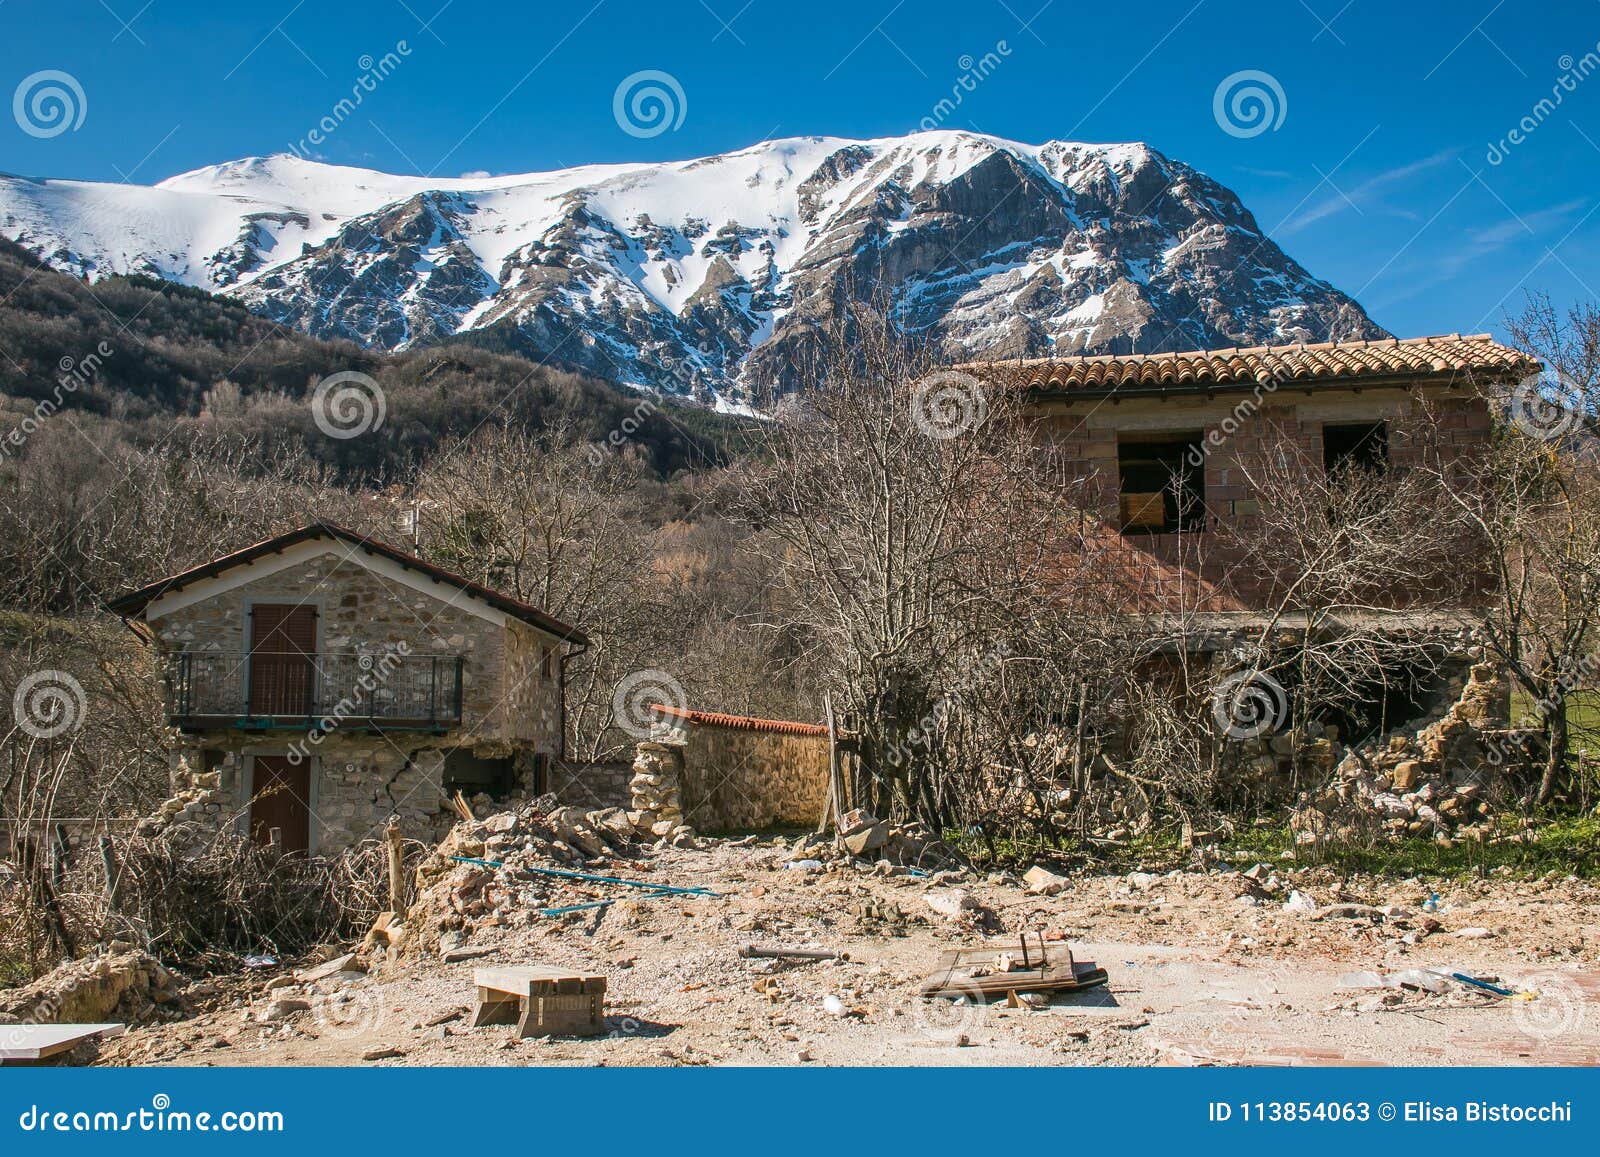 pretare village destroyed by earthquake near the vettore mountain, marche, italy